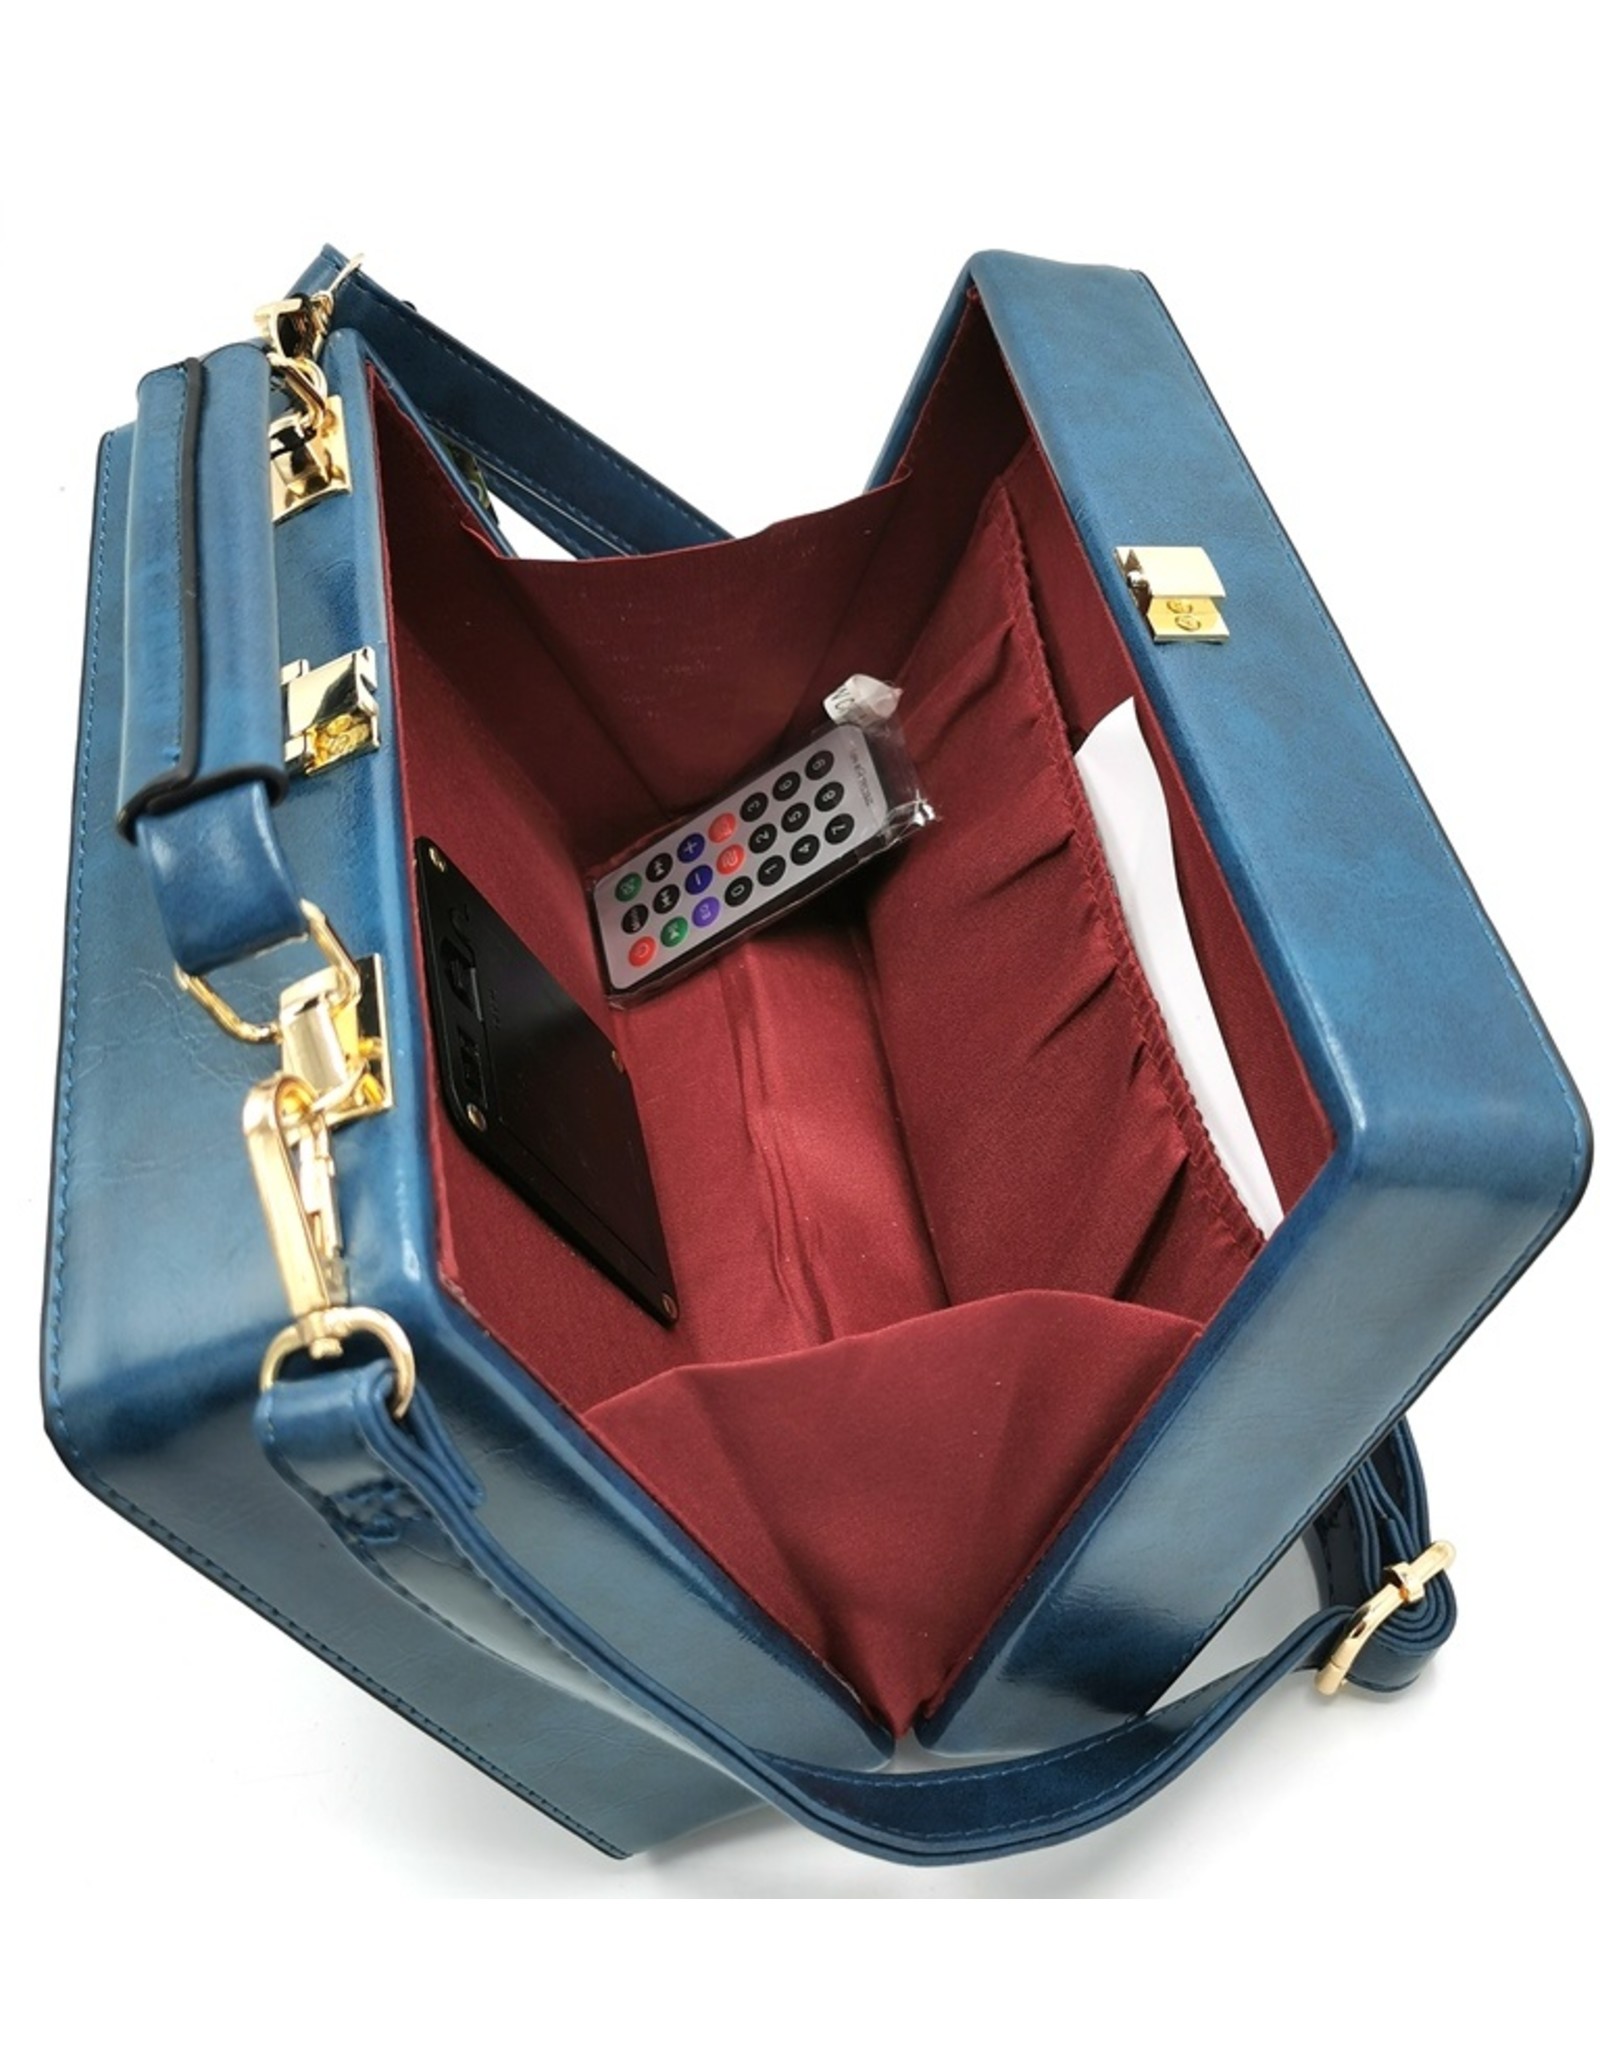 Trukado Fantasy bags - Retro Radio bag with Real Radio and Bluetooth